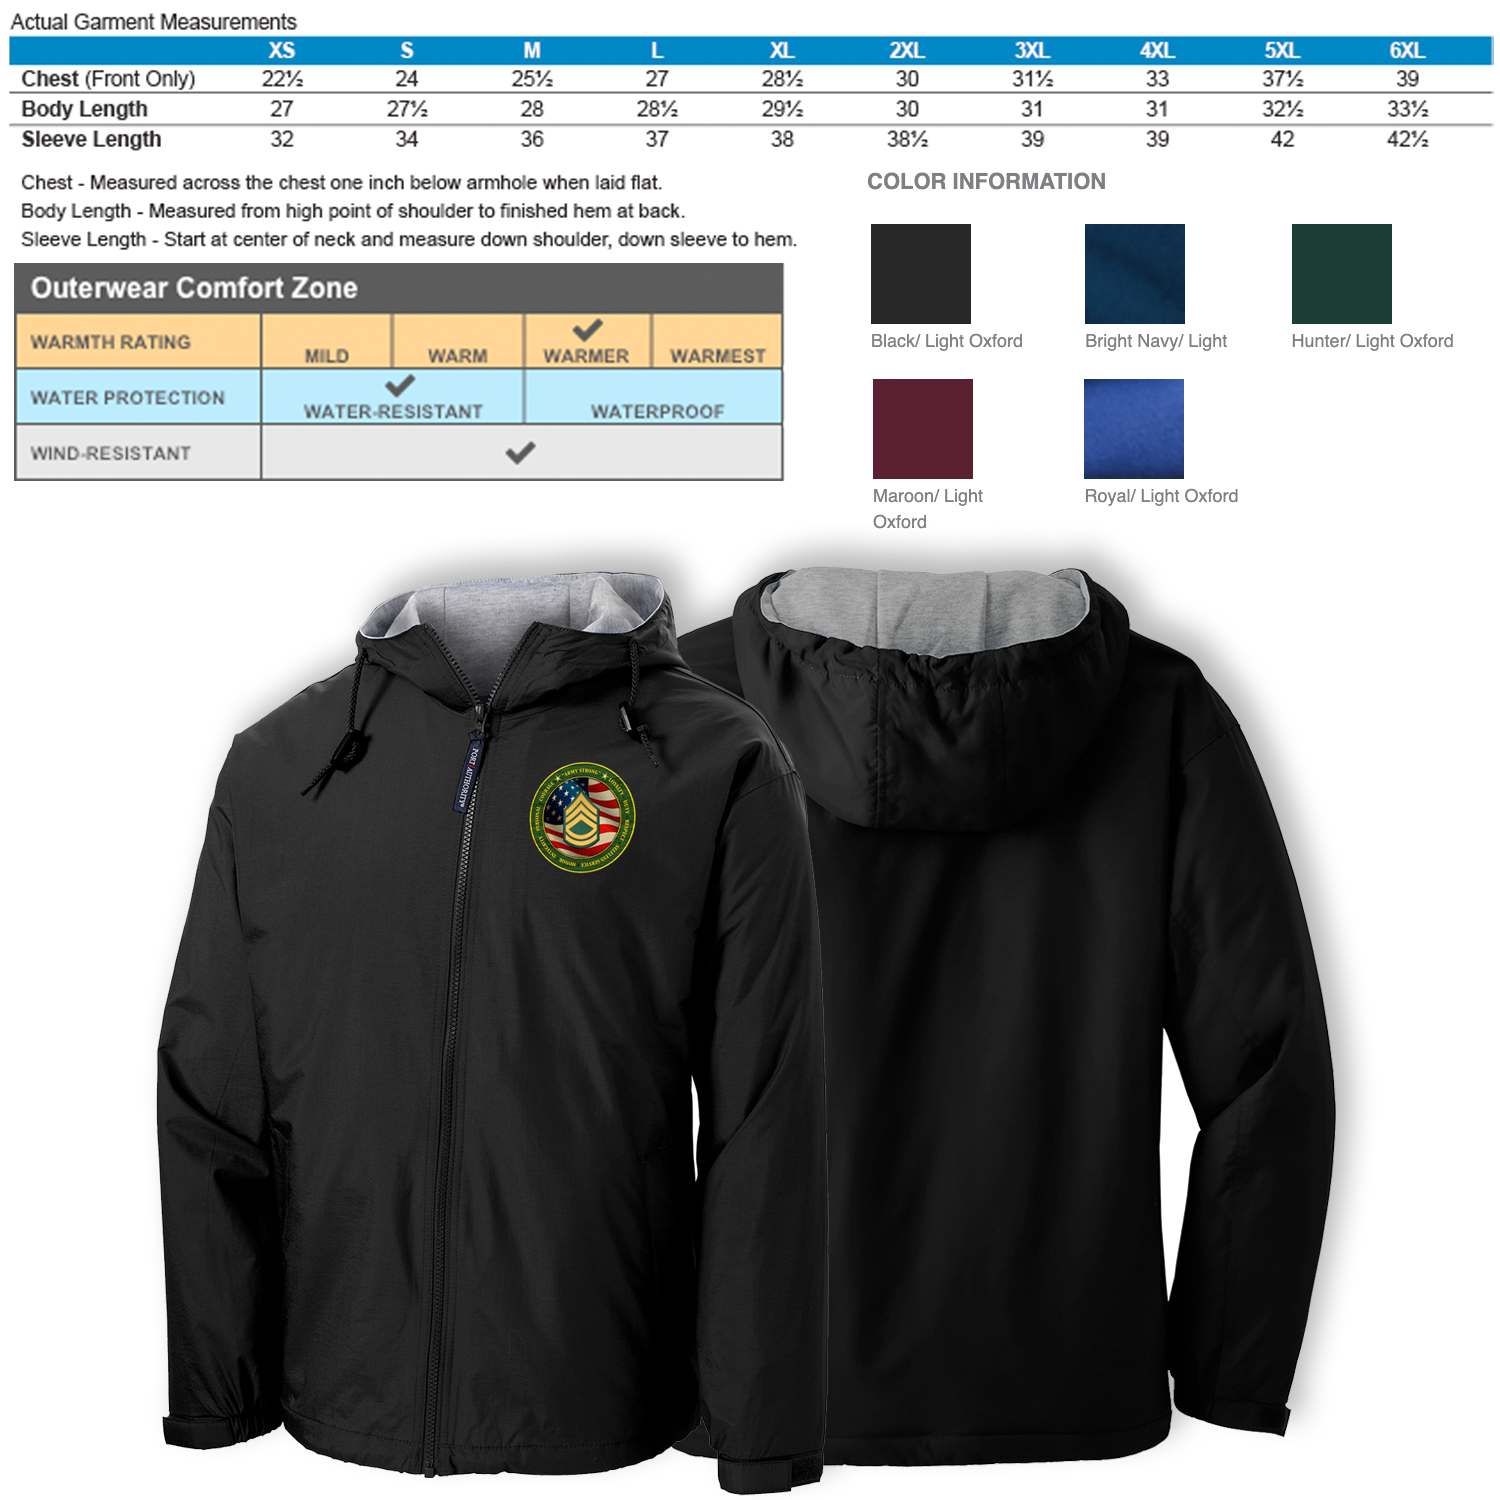 Custom US Army Ranks/Insignia Military Mottos, Core Values Print On Left Chest Team Jacket